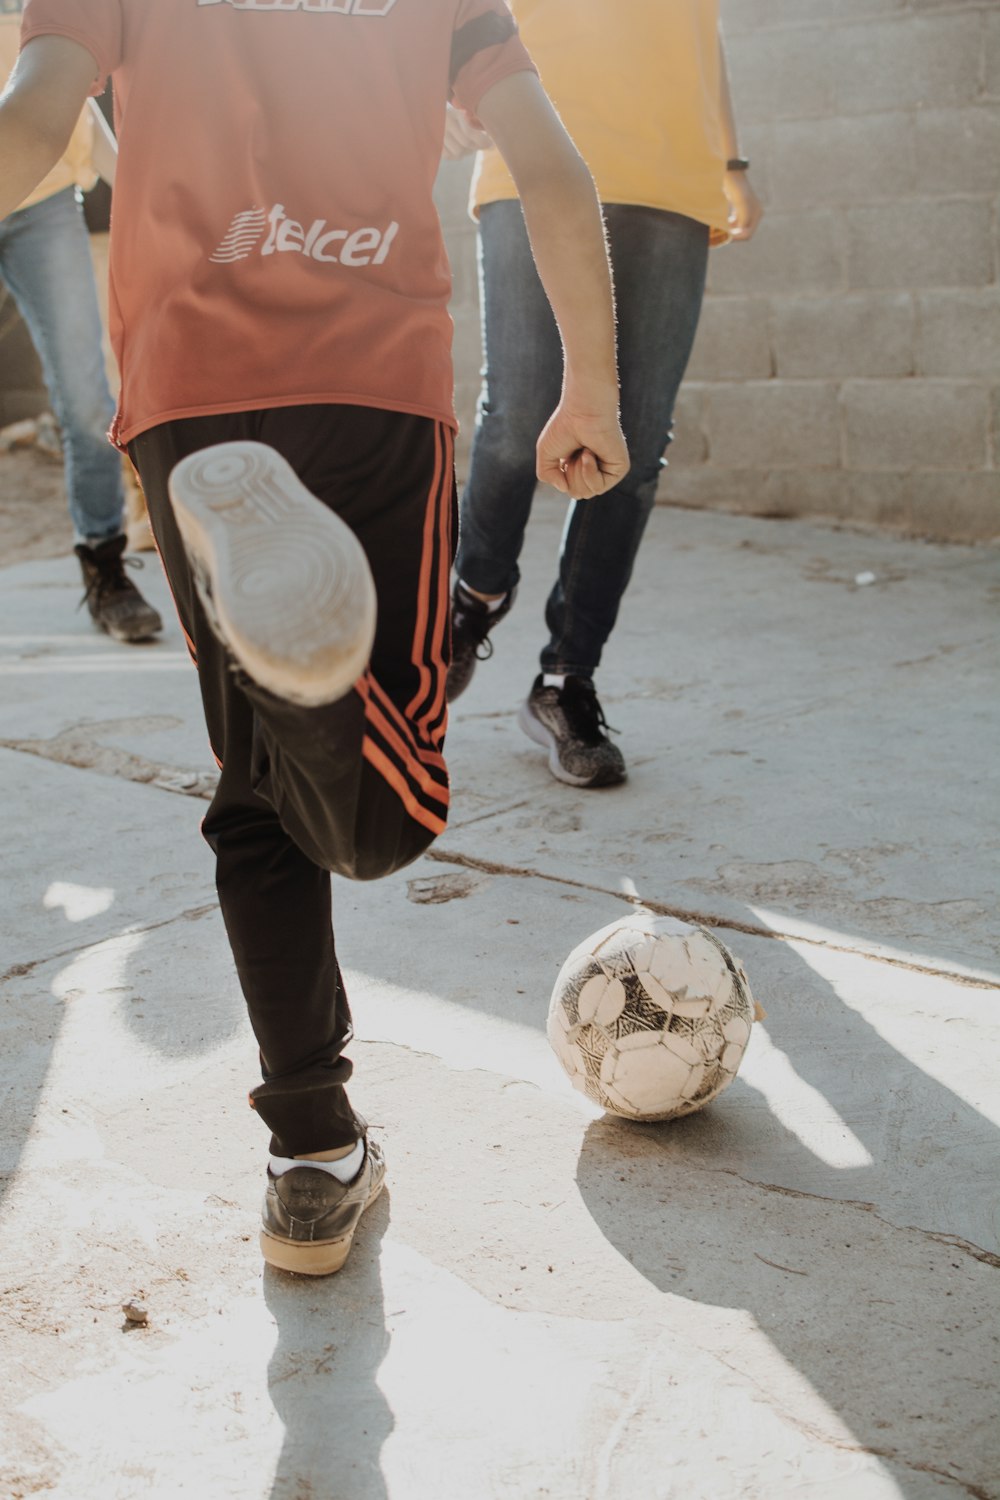 a young boy kicking a soccer ball on a sidewalk